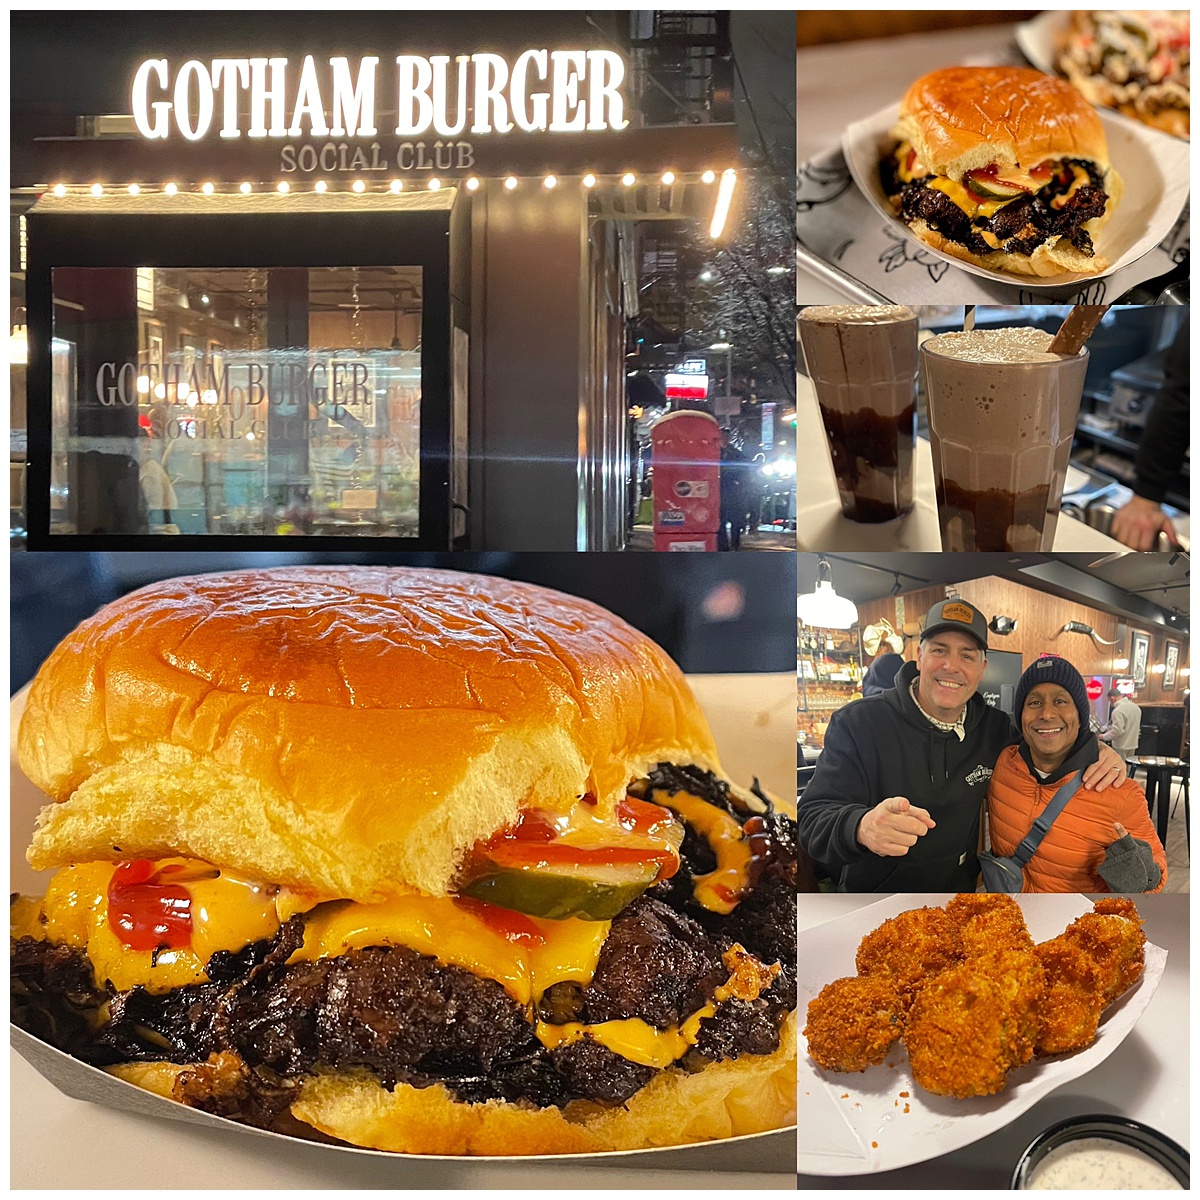 Gotham Burger Social Club montage